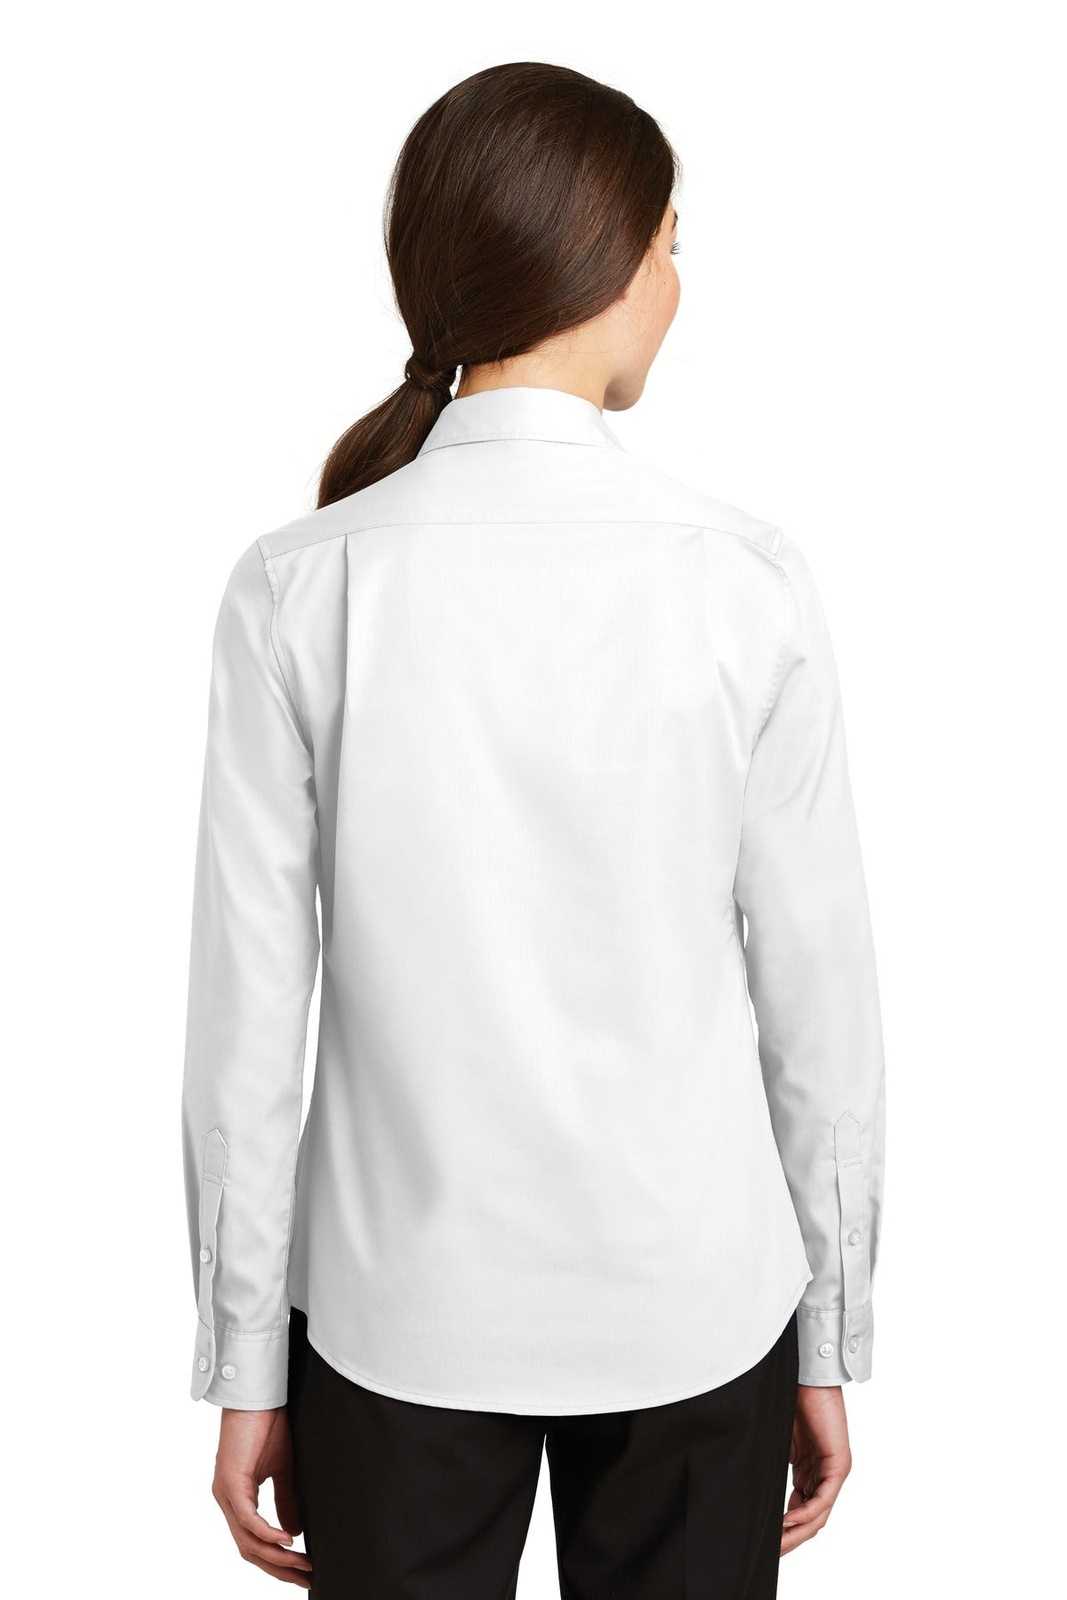 Port Authority L663 Ladies Superpro Twill Shirt - White - HIT a Double - 2